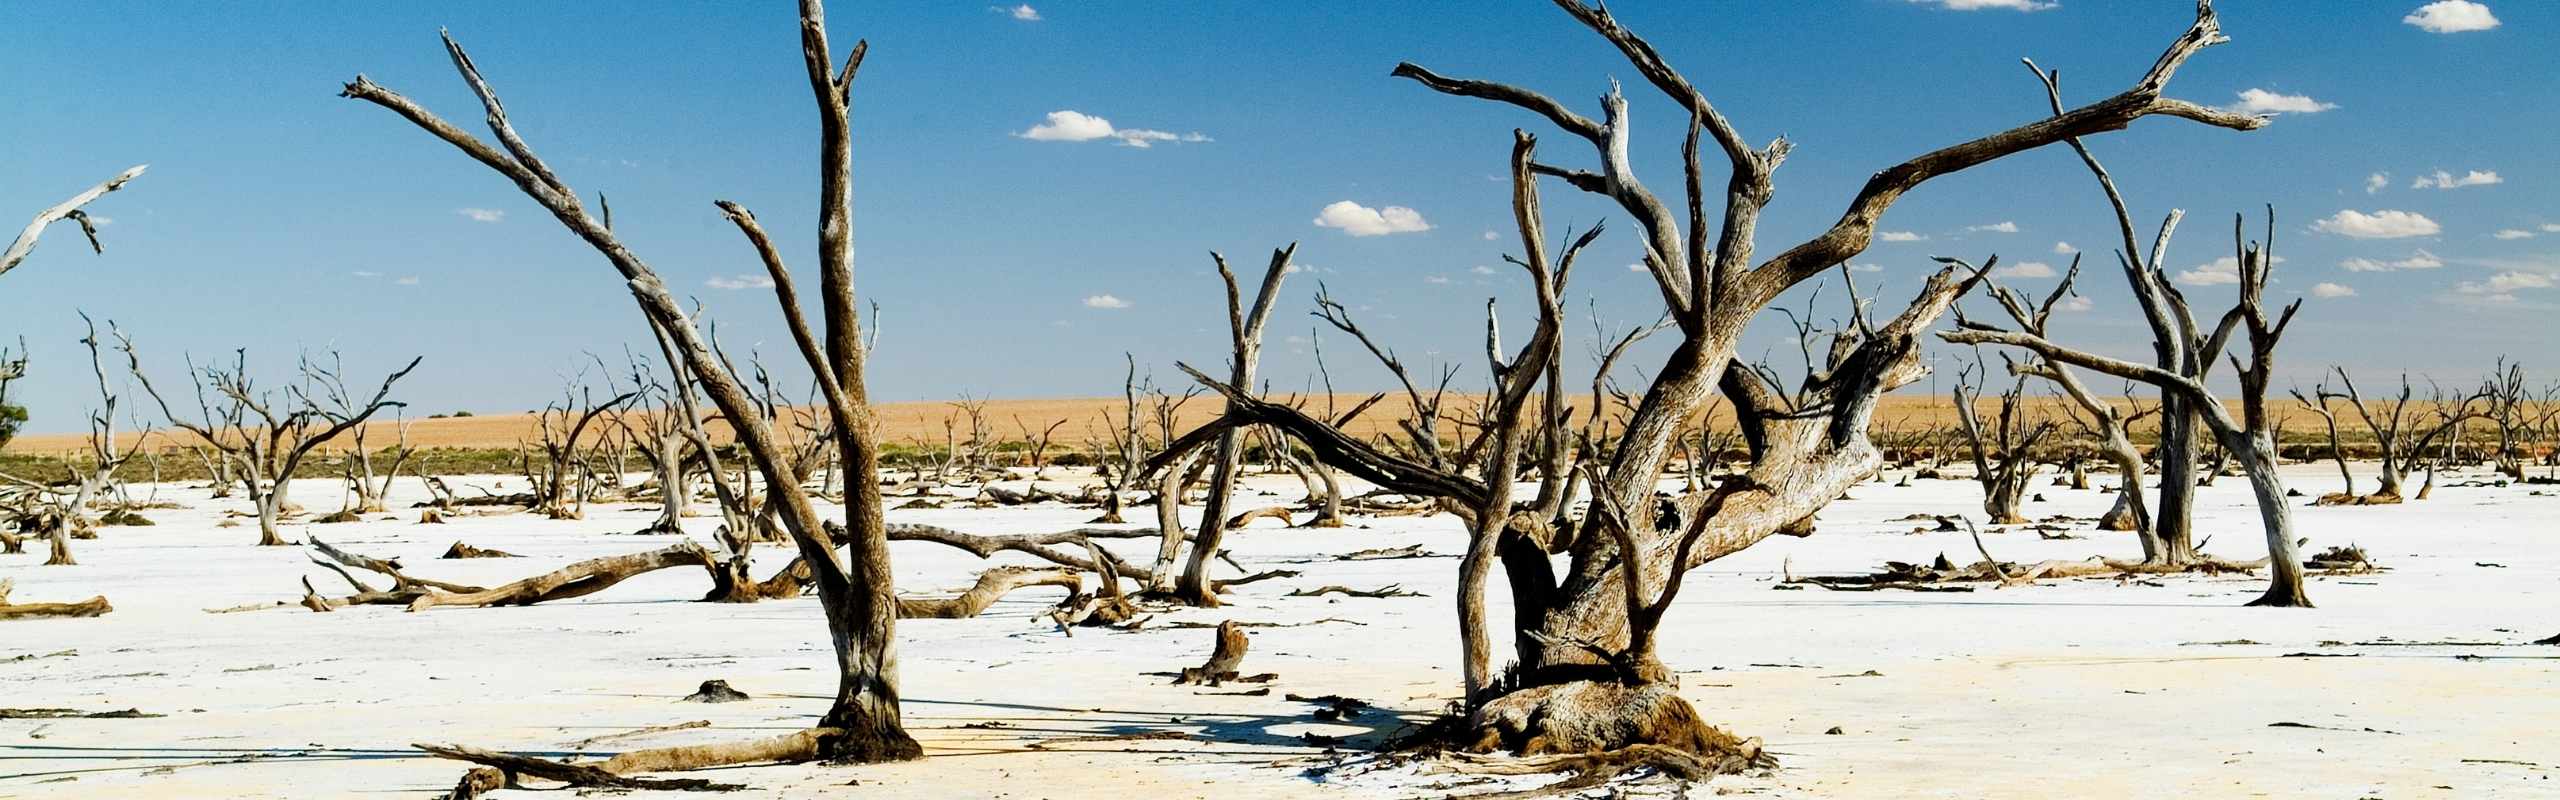 Desert with dead trees